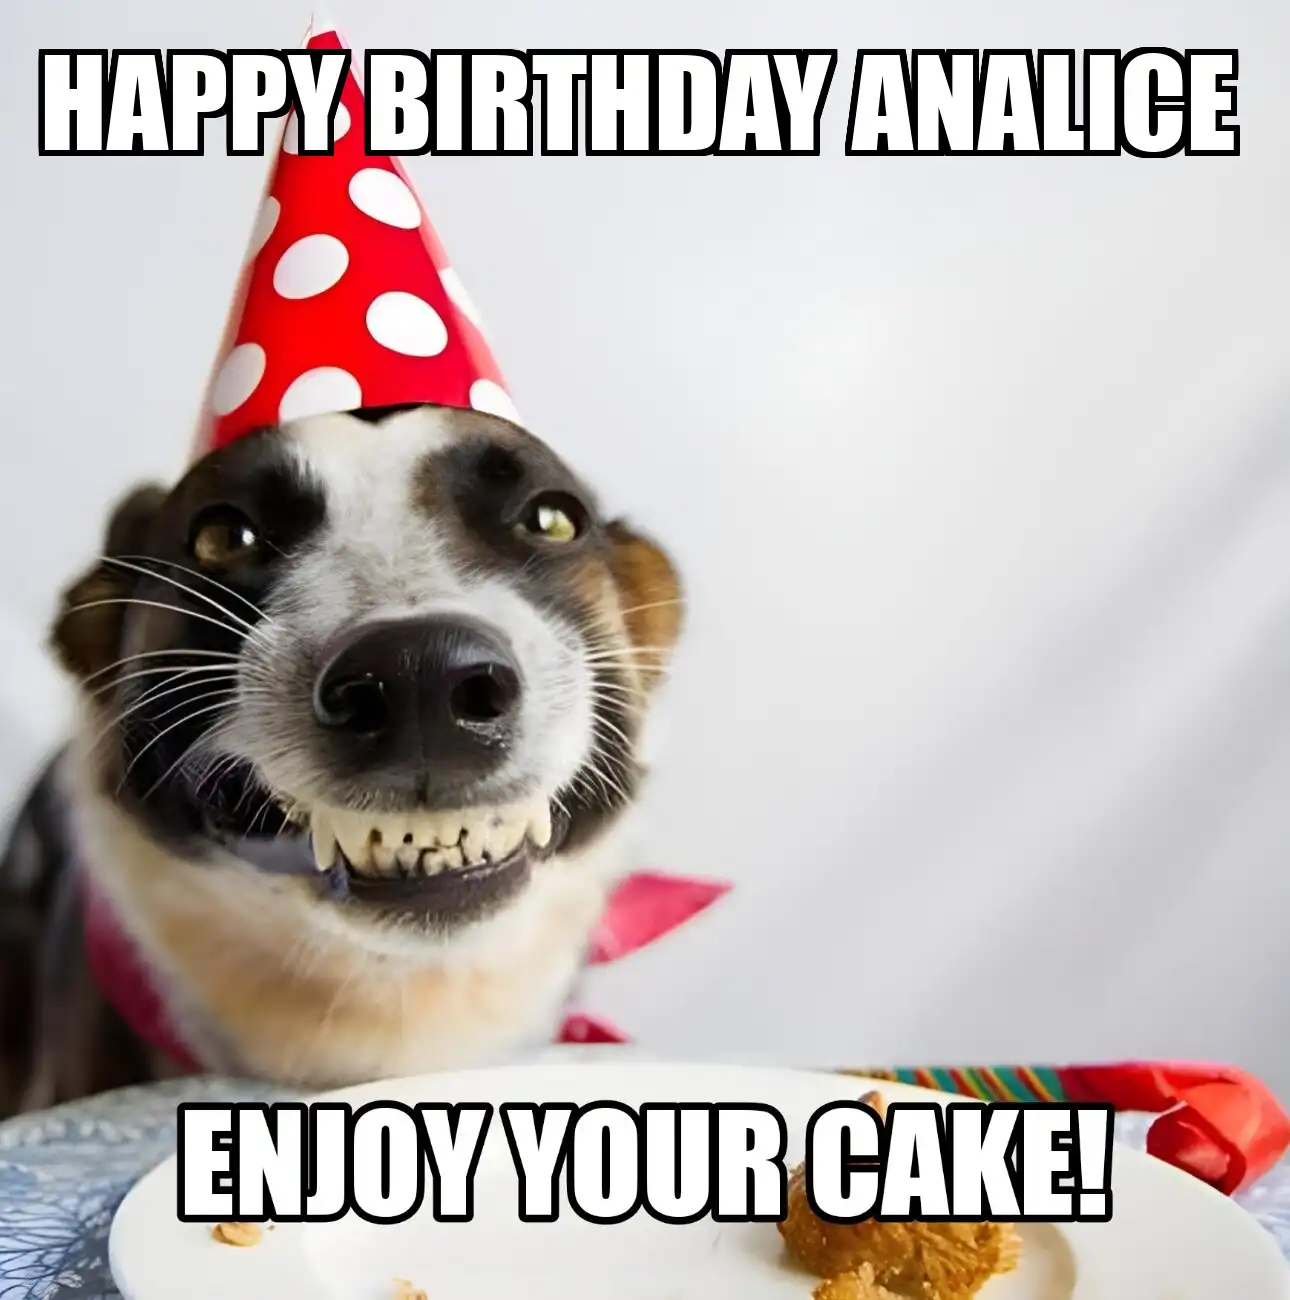 Happy Birthday Analice Enjoy Your Cake Dog Meme